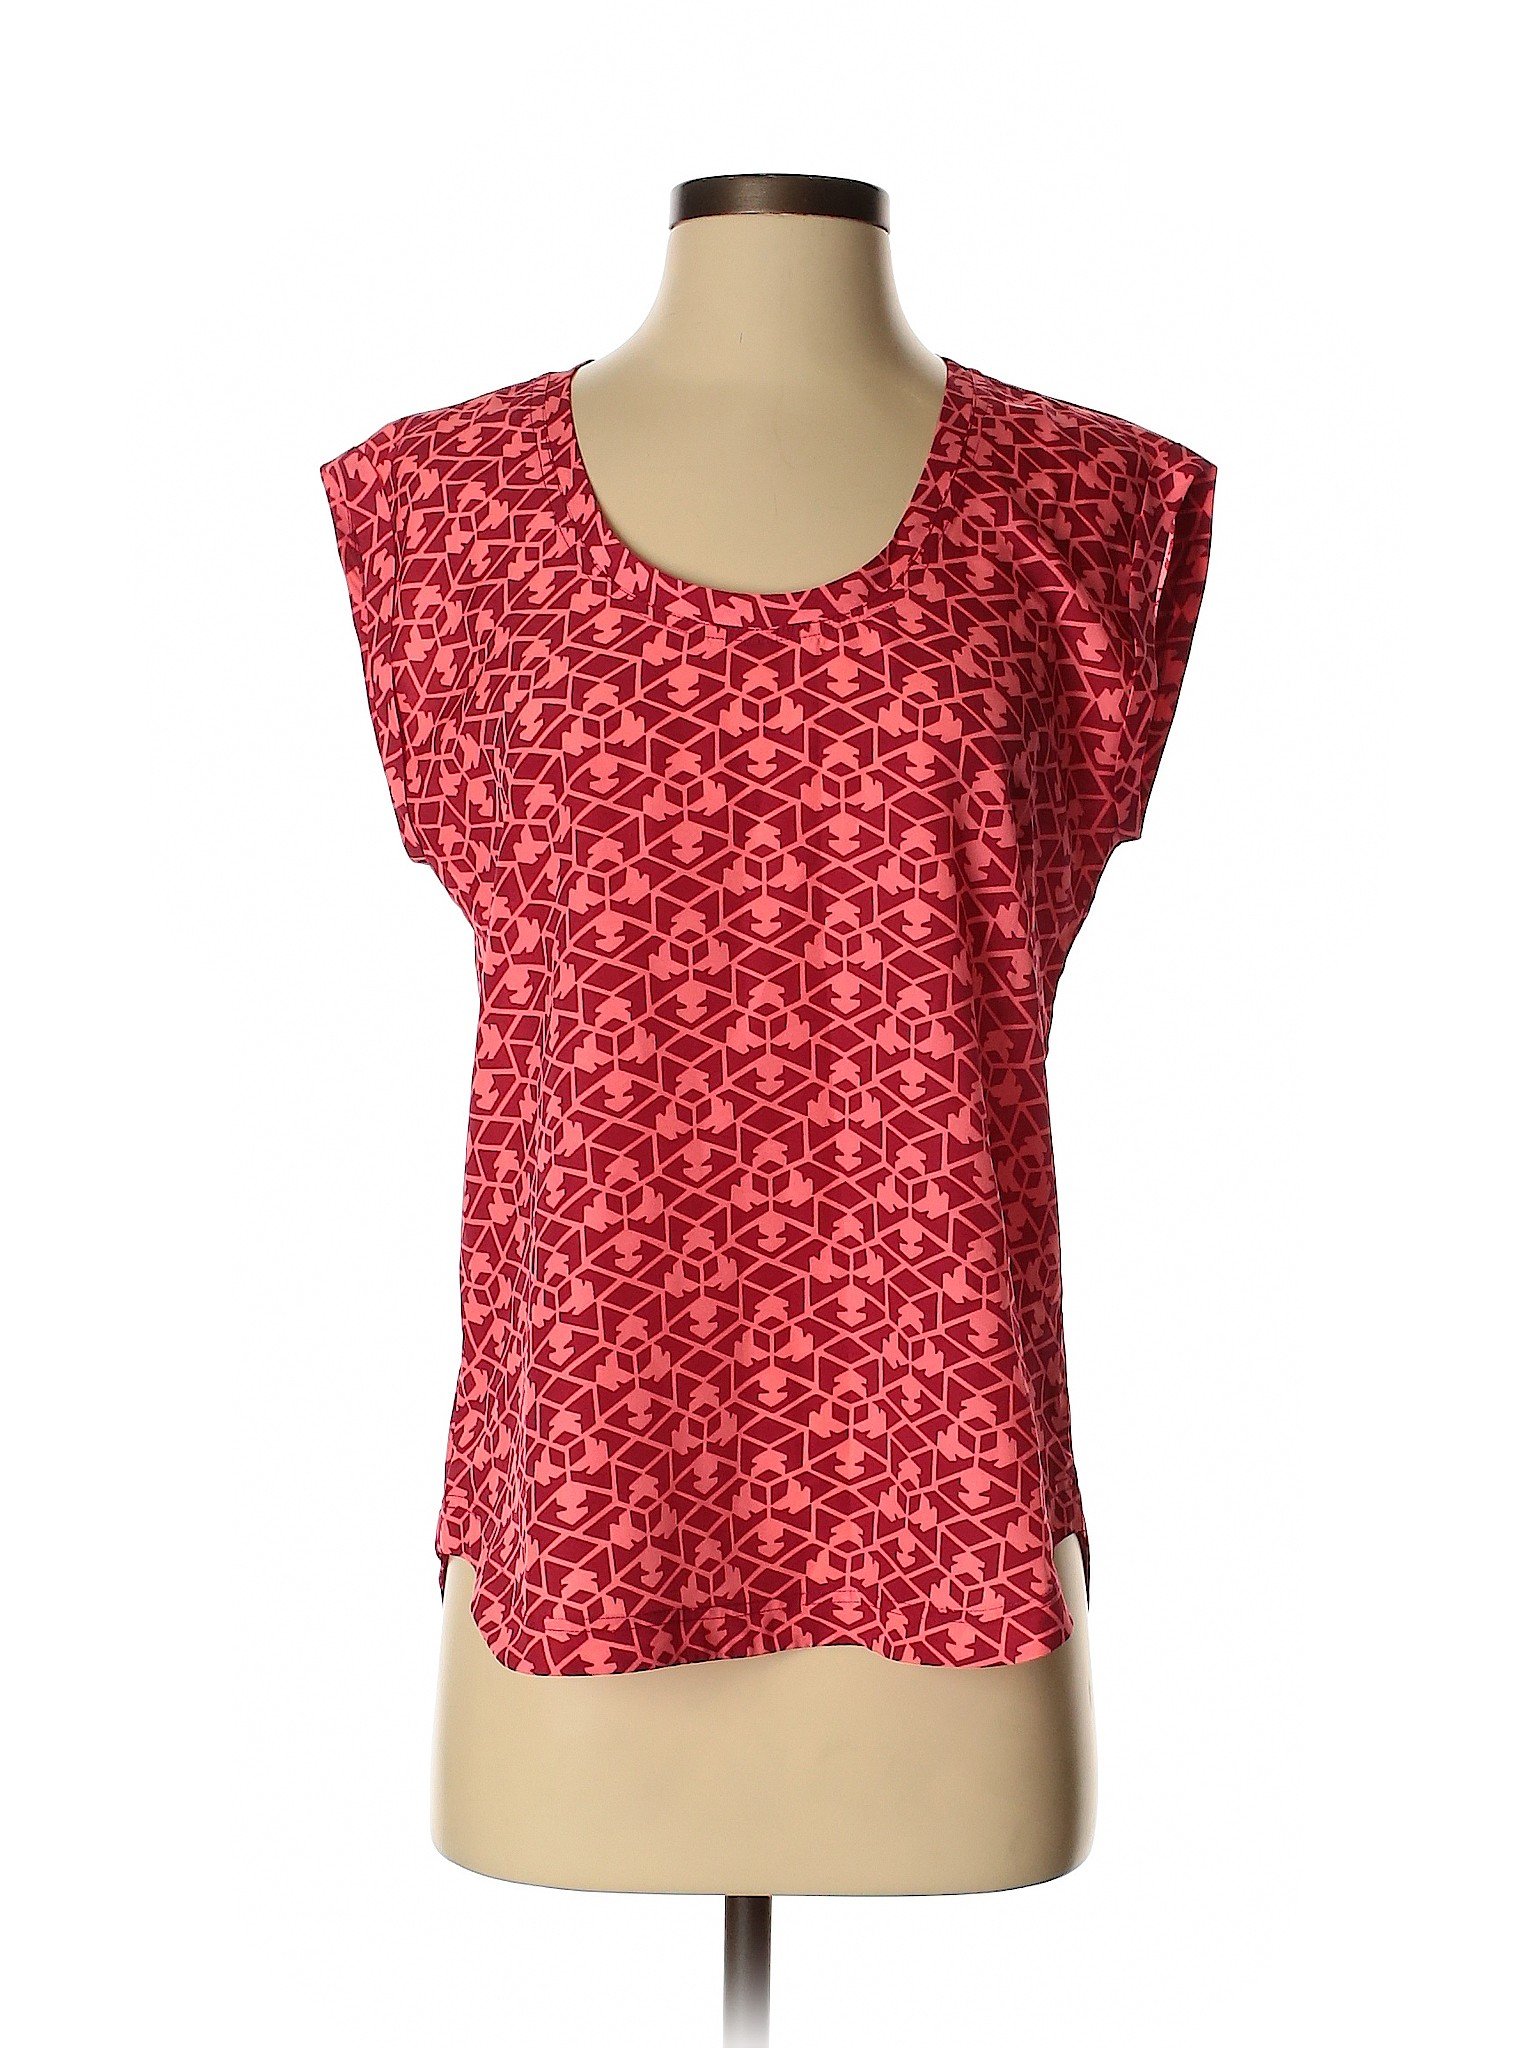 J.Crew Factory Store Women Red Short Sleeve Blouse 4 | eBay